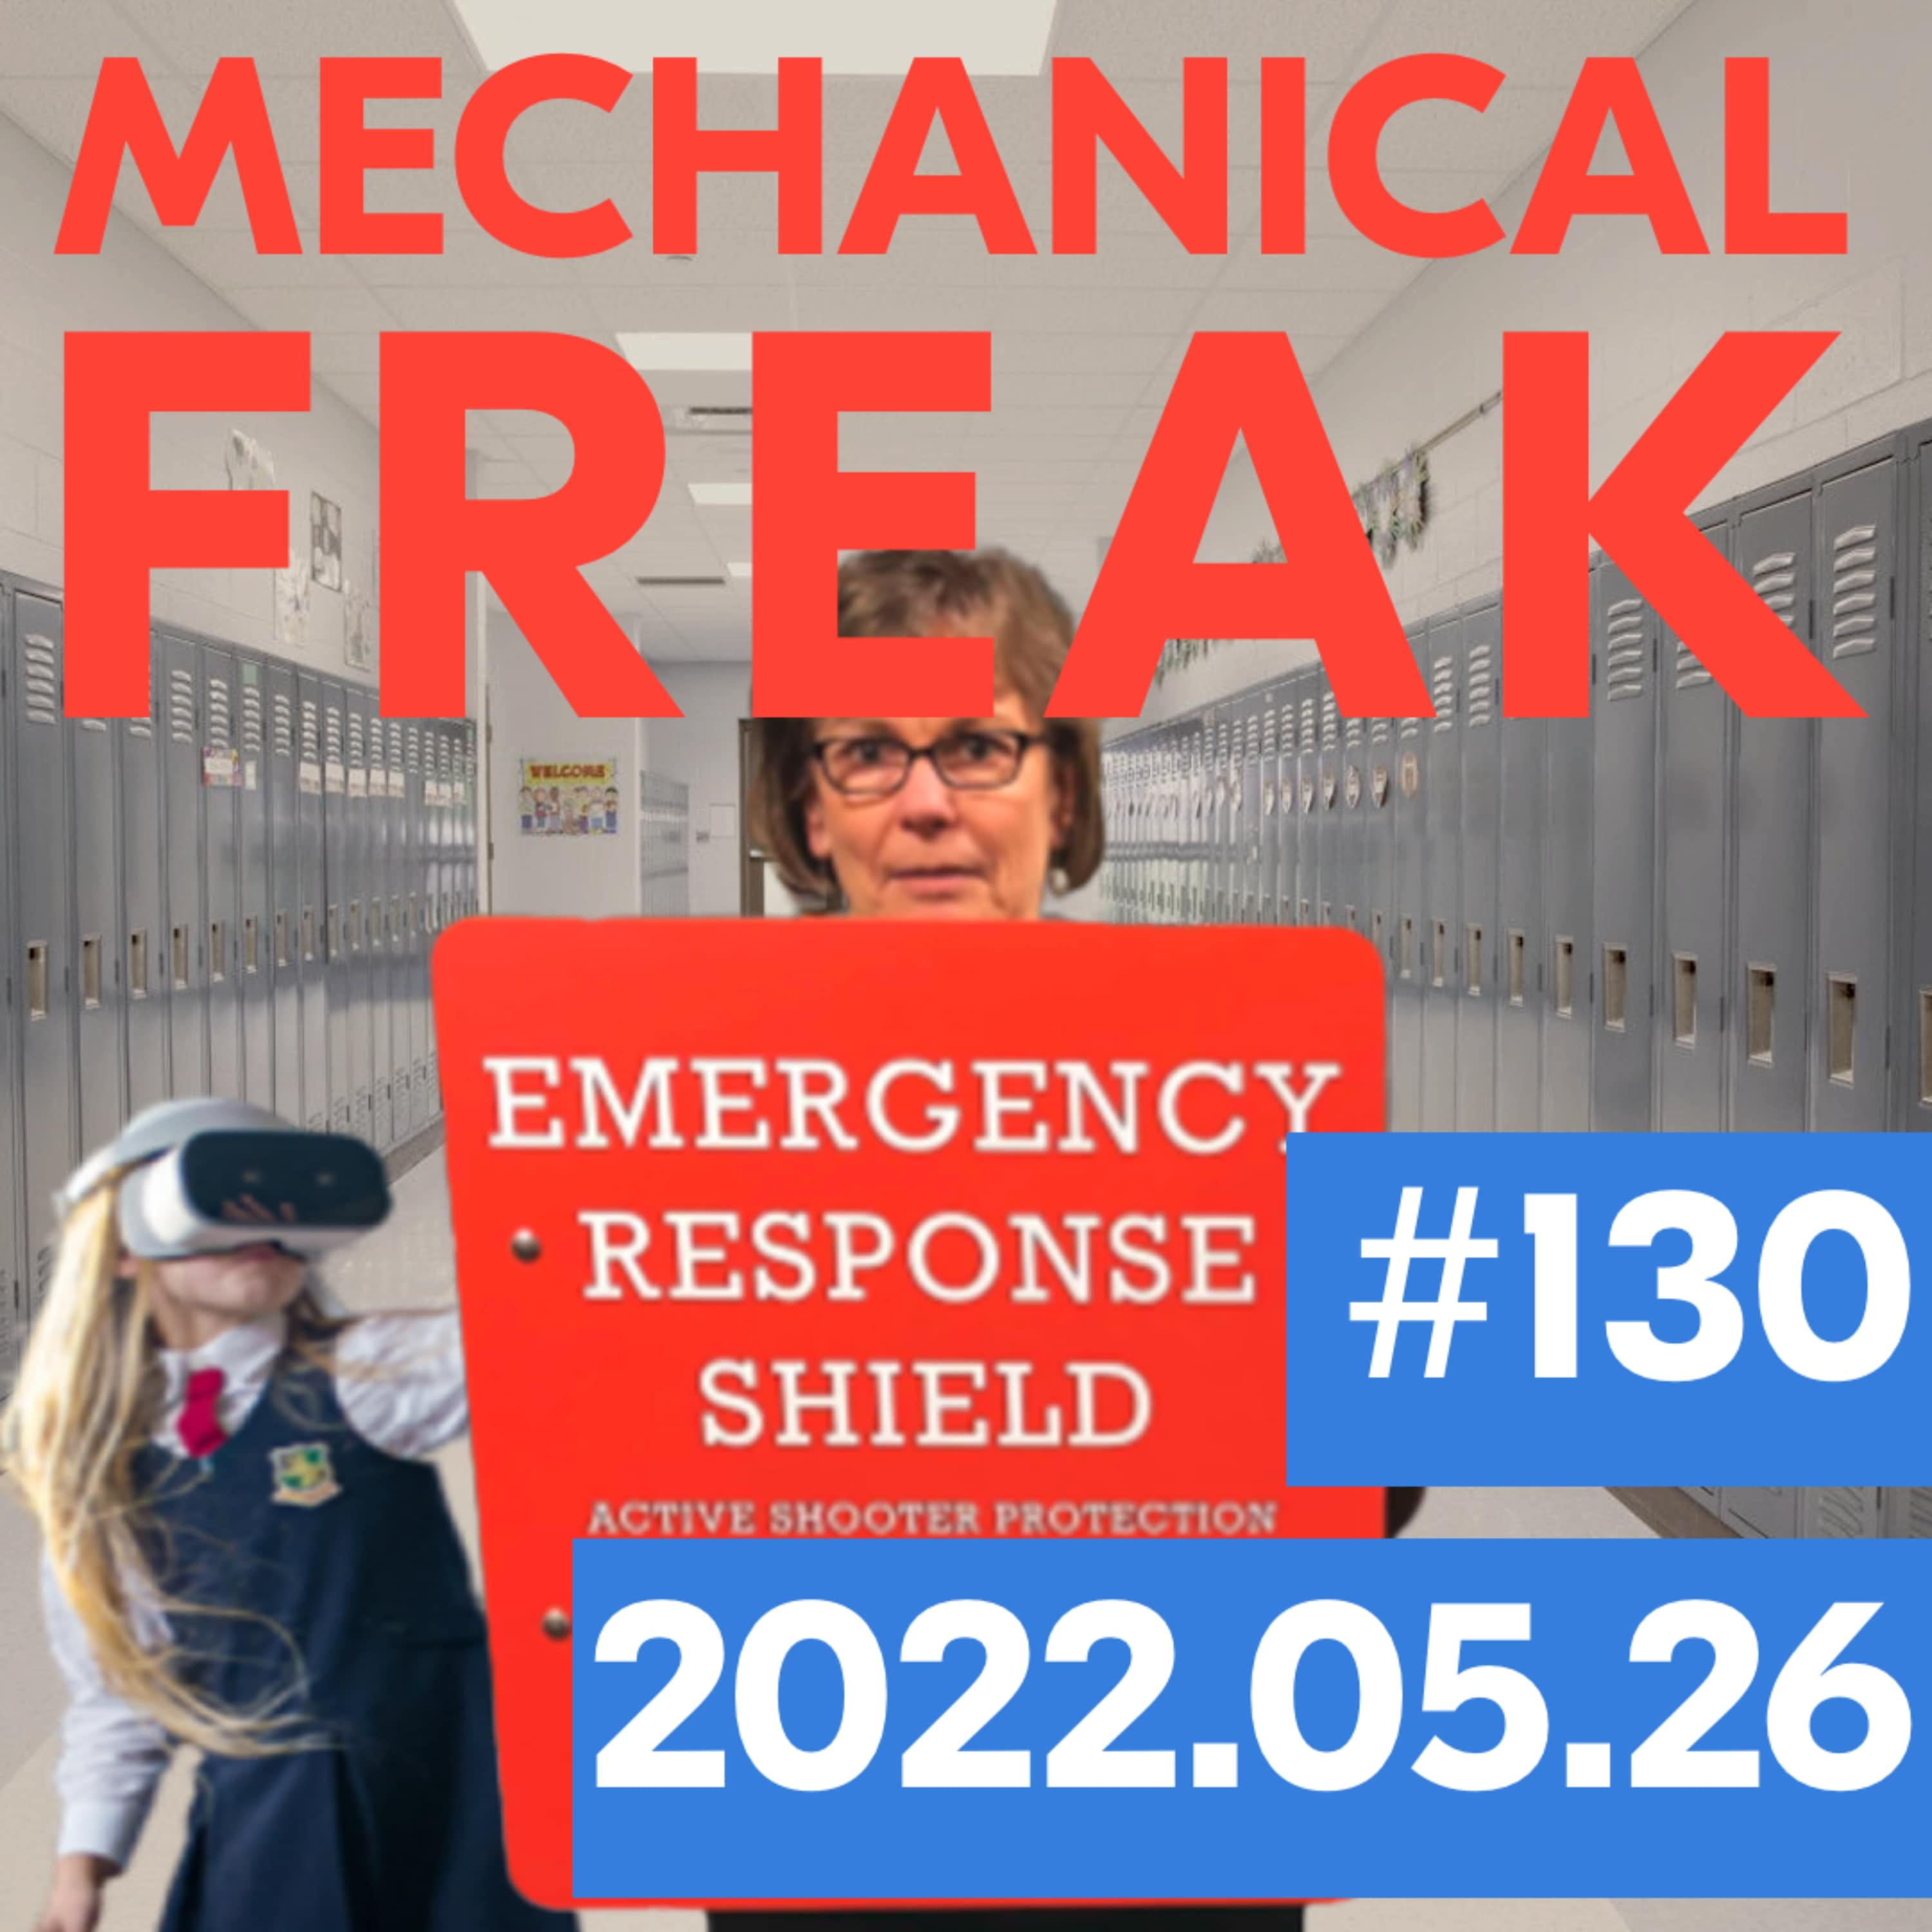 Episode #mechanical-freak-130 cover